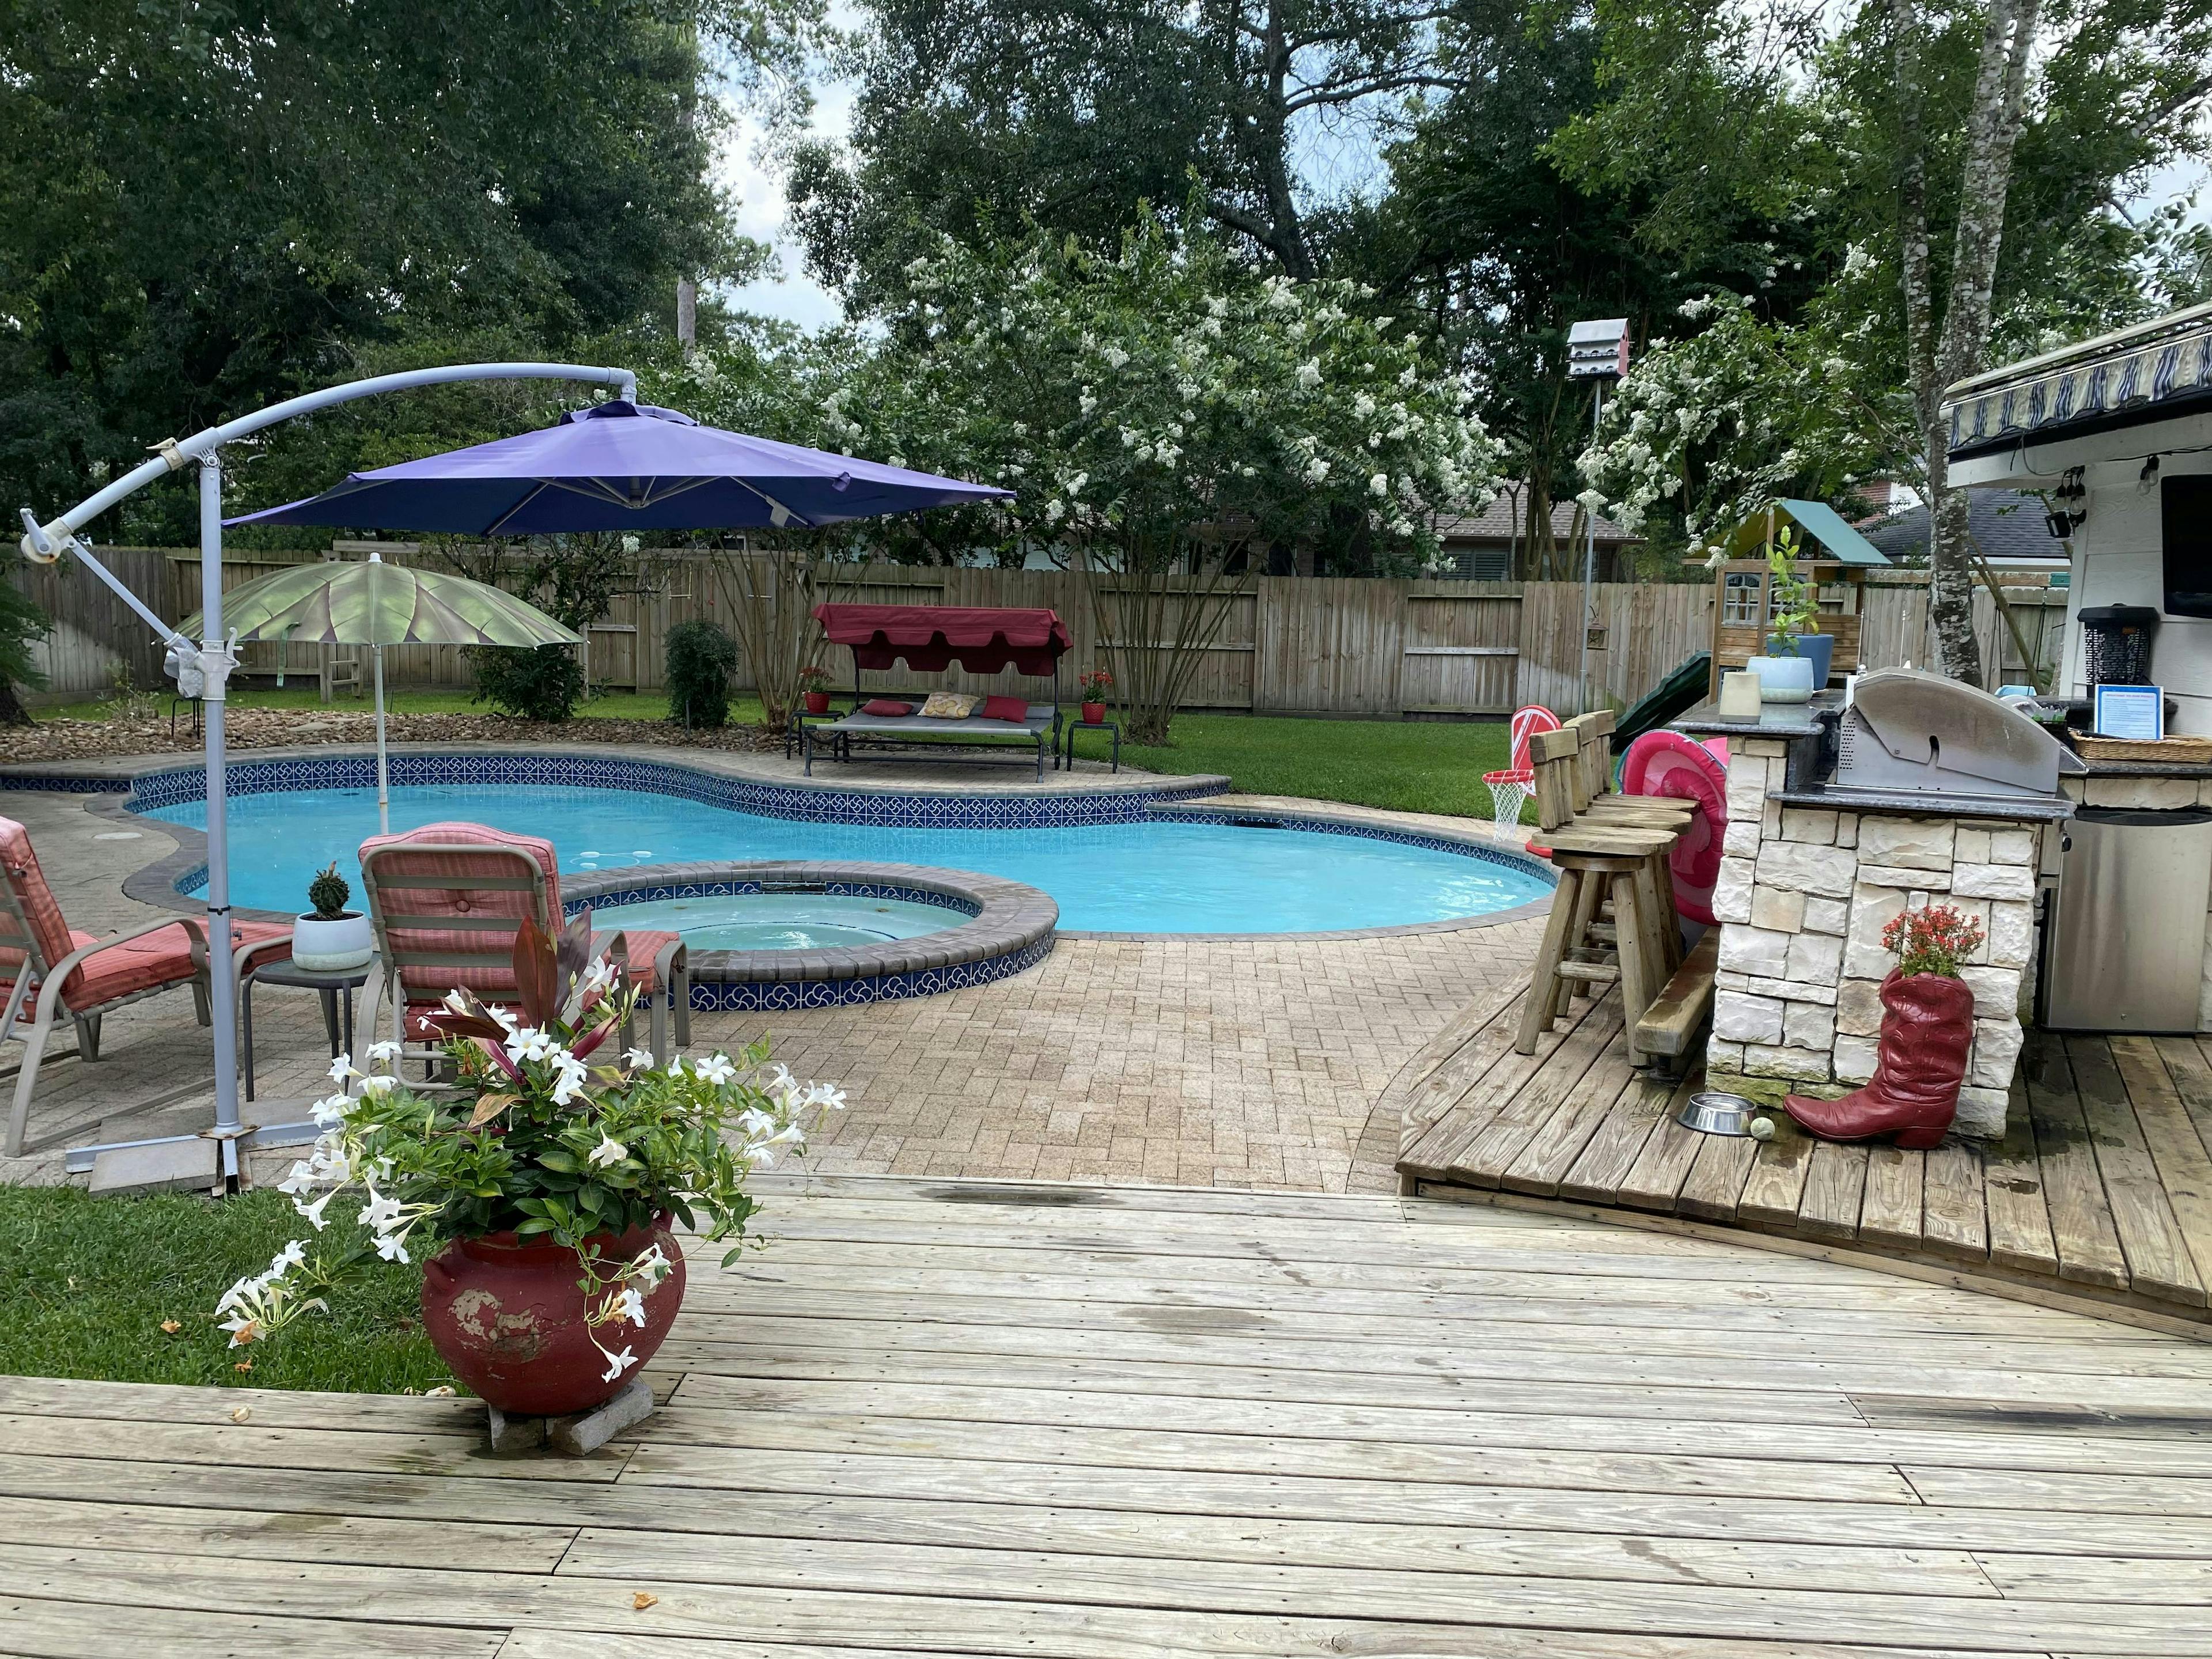 Backyard pool oasis with grill, play set, & hammock